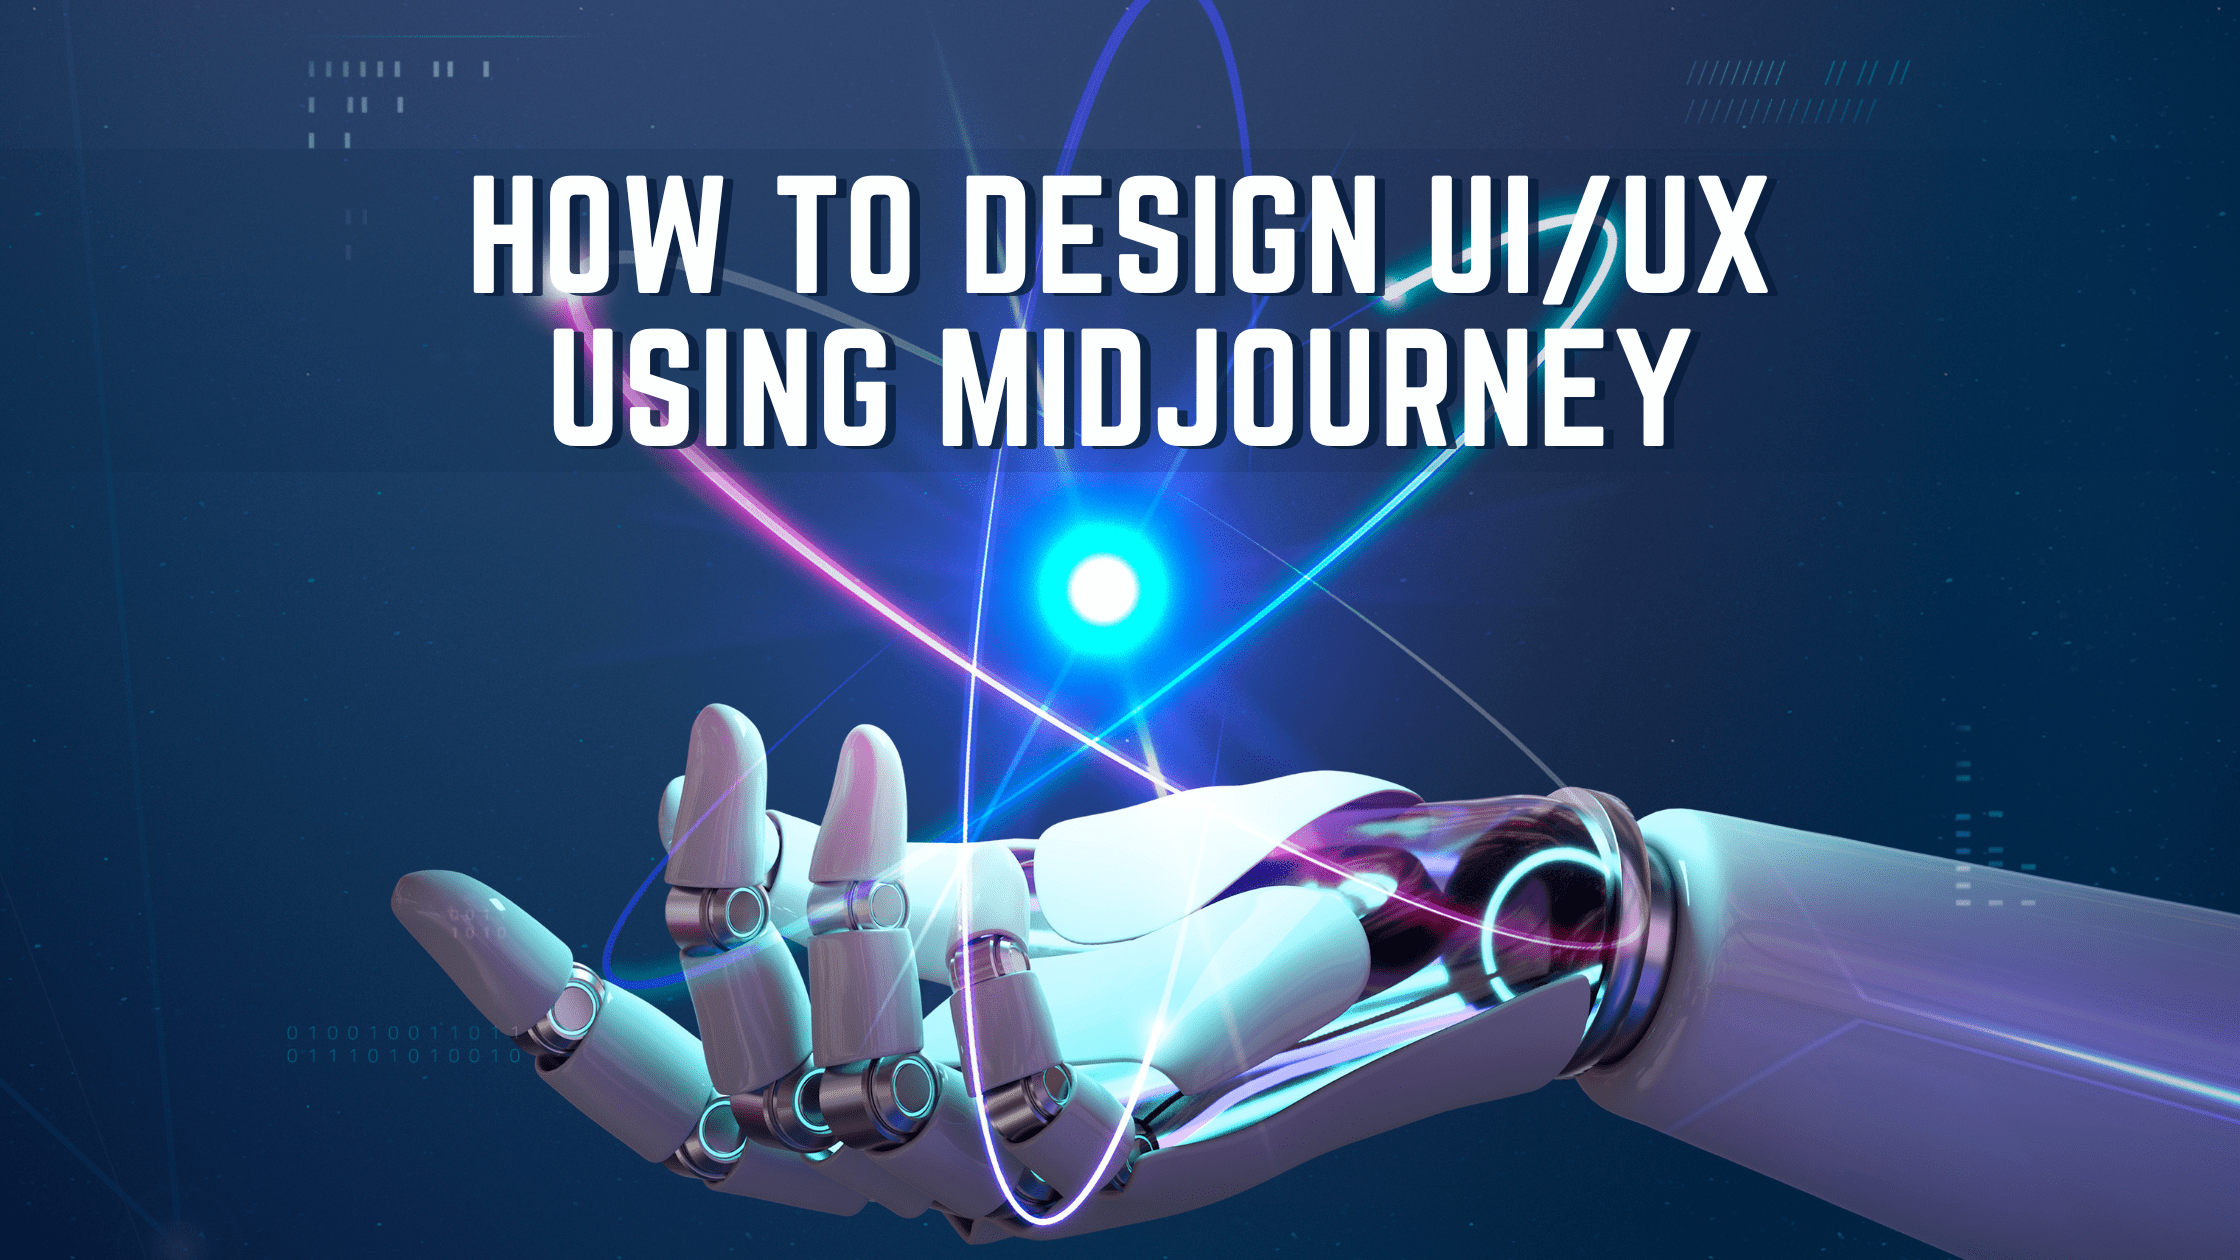 HOW TO DESIGN UI/UX USING MIDJOURNEY